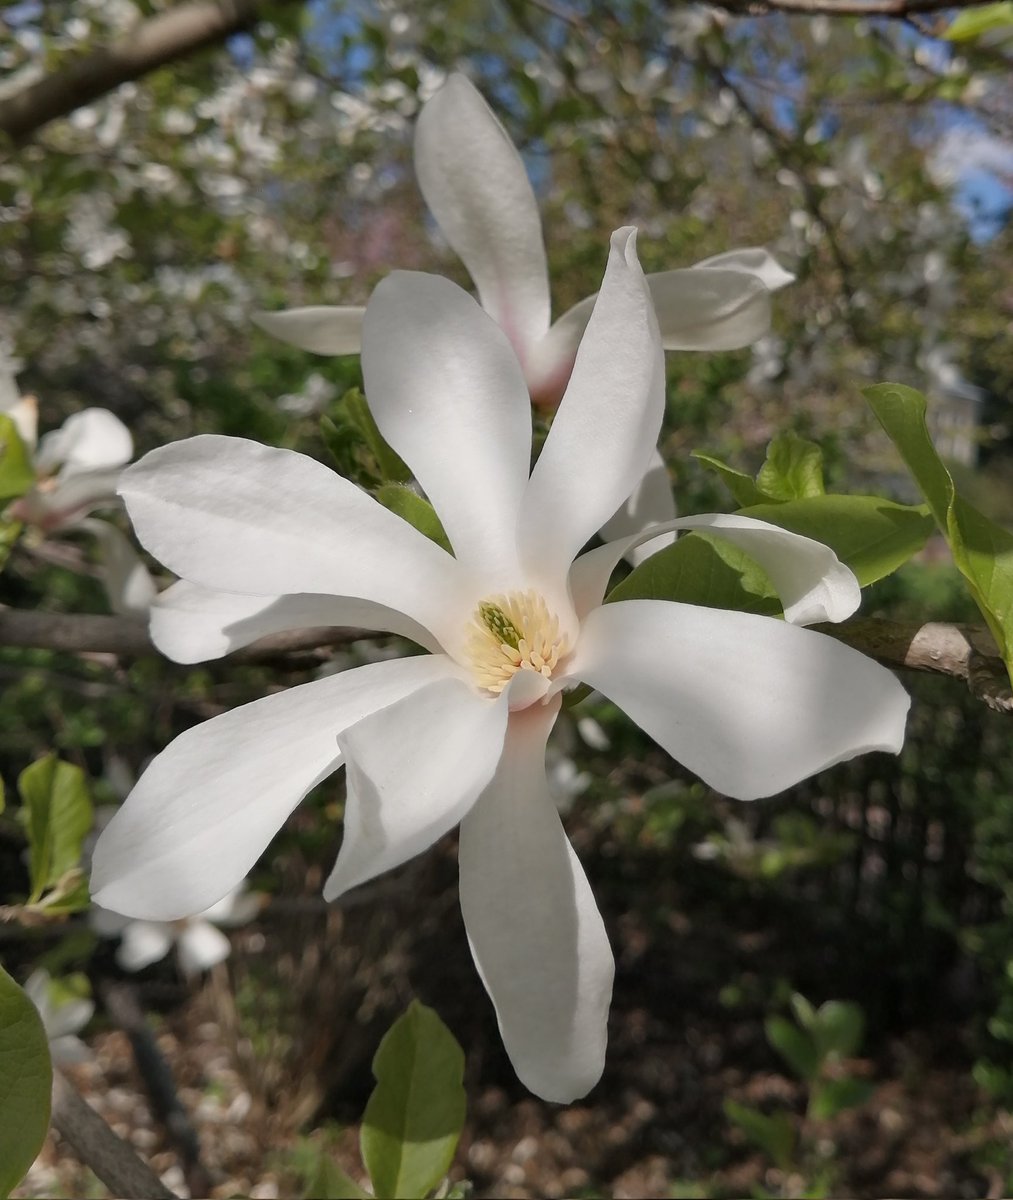 Magnolia

victoria-arts.com

#magnolya #magnolia #magnoliafloral #magnoliastyle #magnoliaflower #magnoliatree #magnoliaflowers #magnoliarealty #flowersphoto #artflowers #NaturePhotography  #victoriaart9 #VictoriaArt #catsand1dog #paintingswoldartist #photosnature_victoria